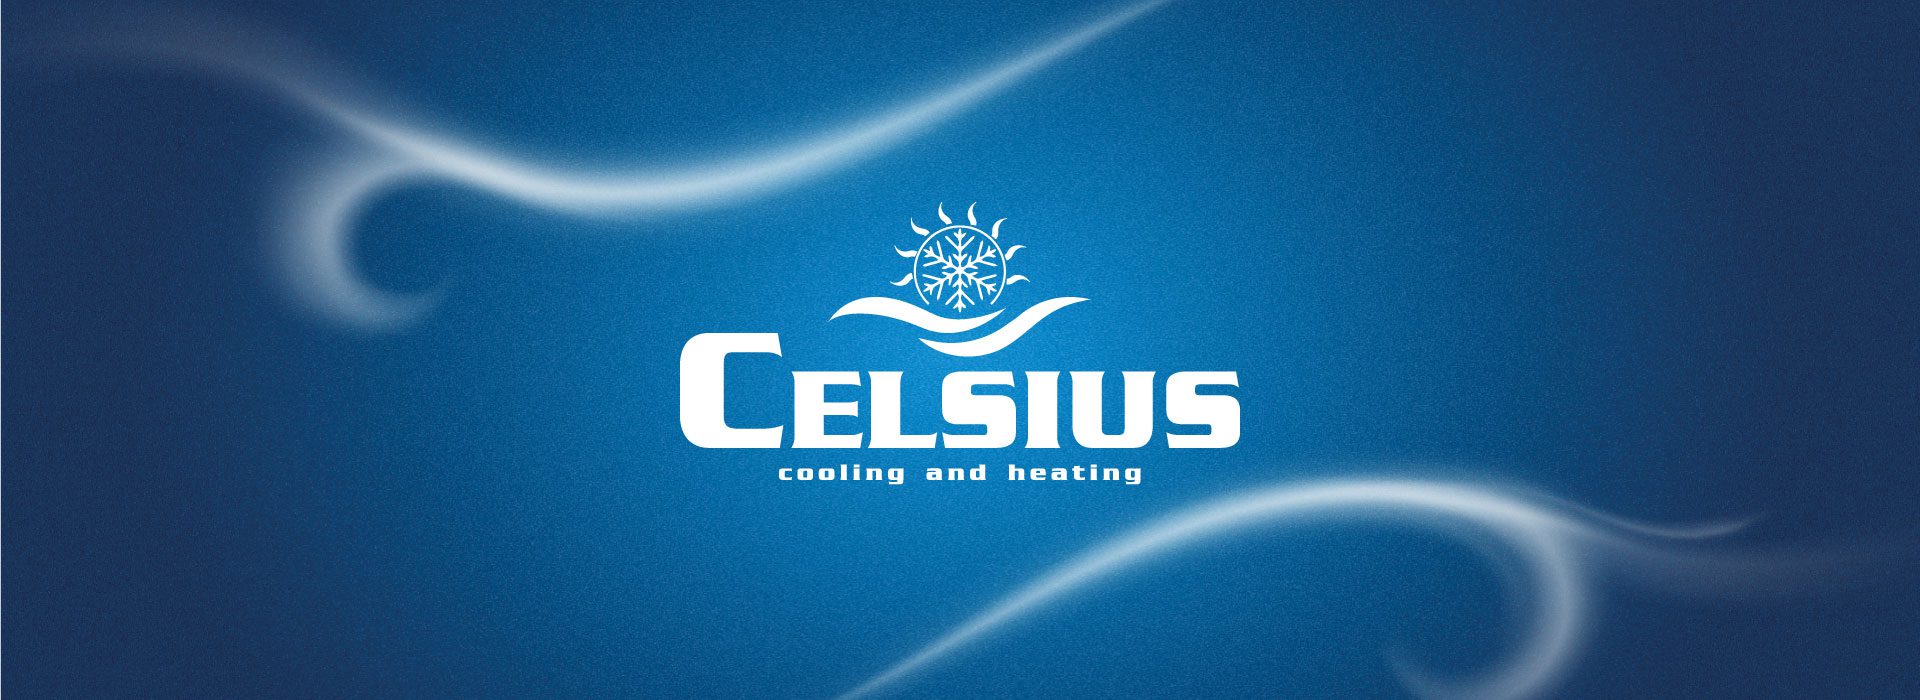 Celsius marketing Sparsis